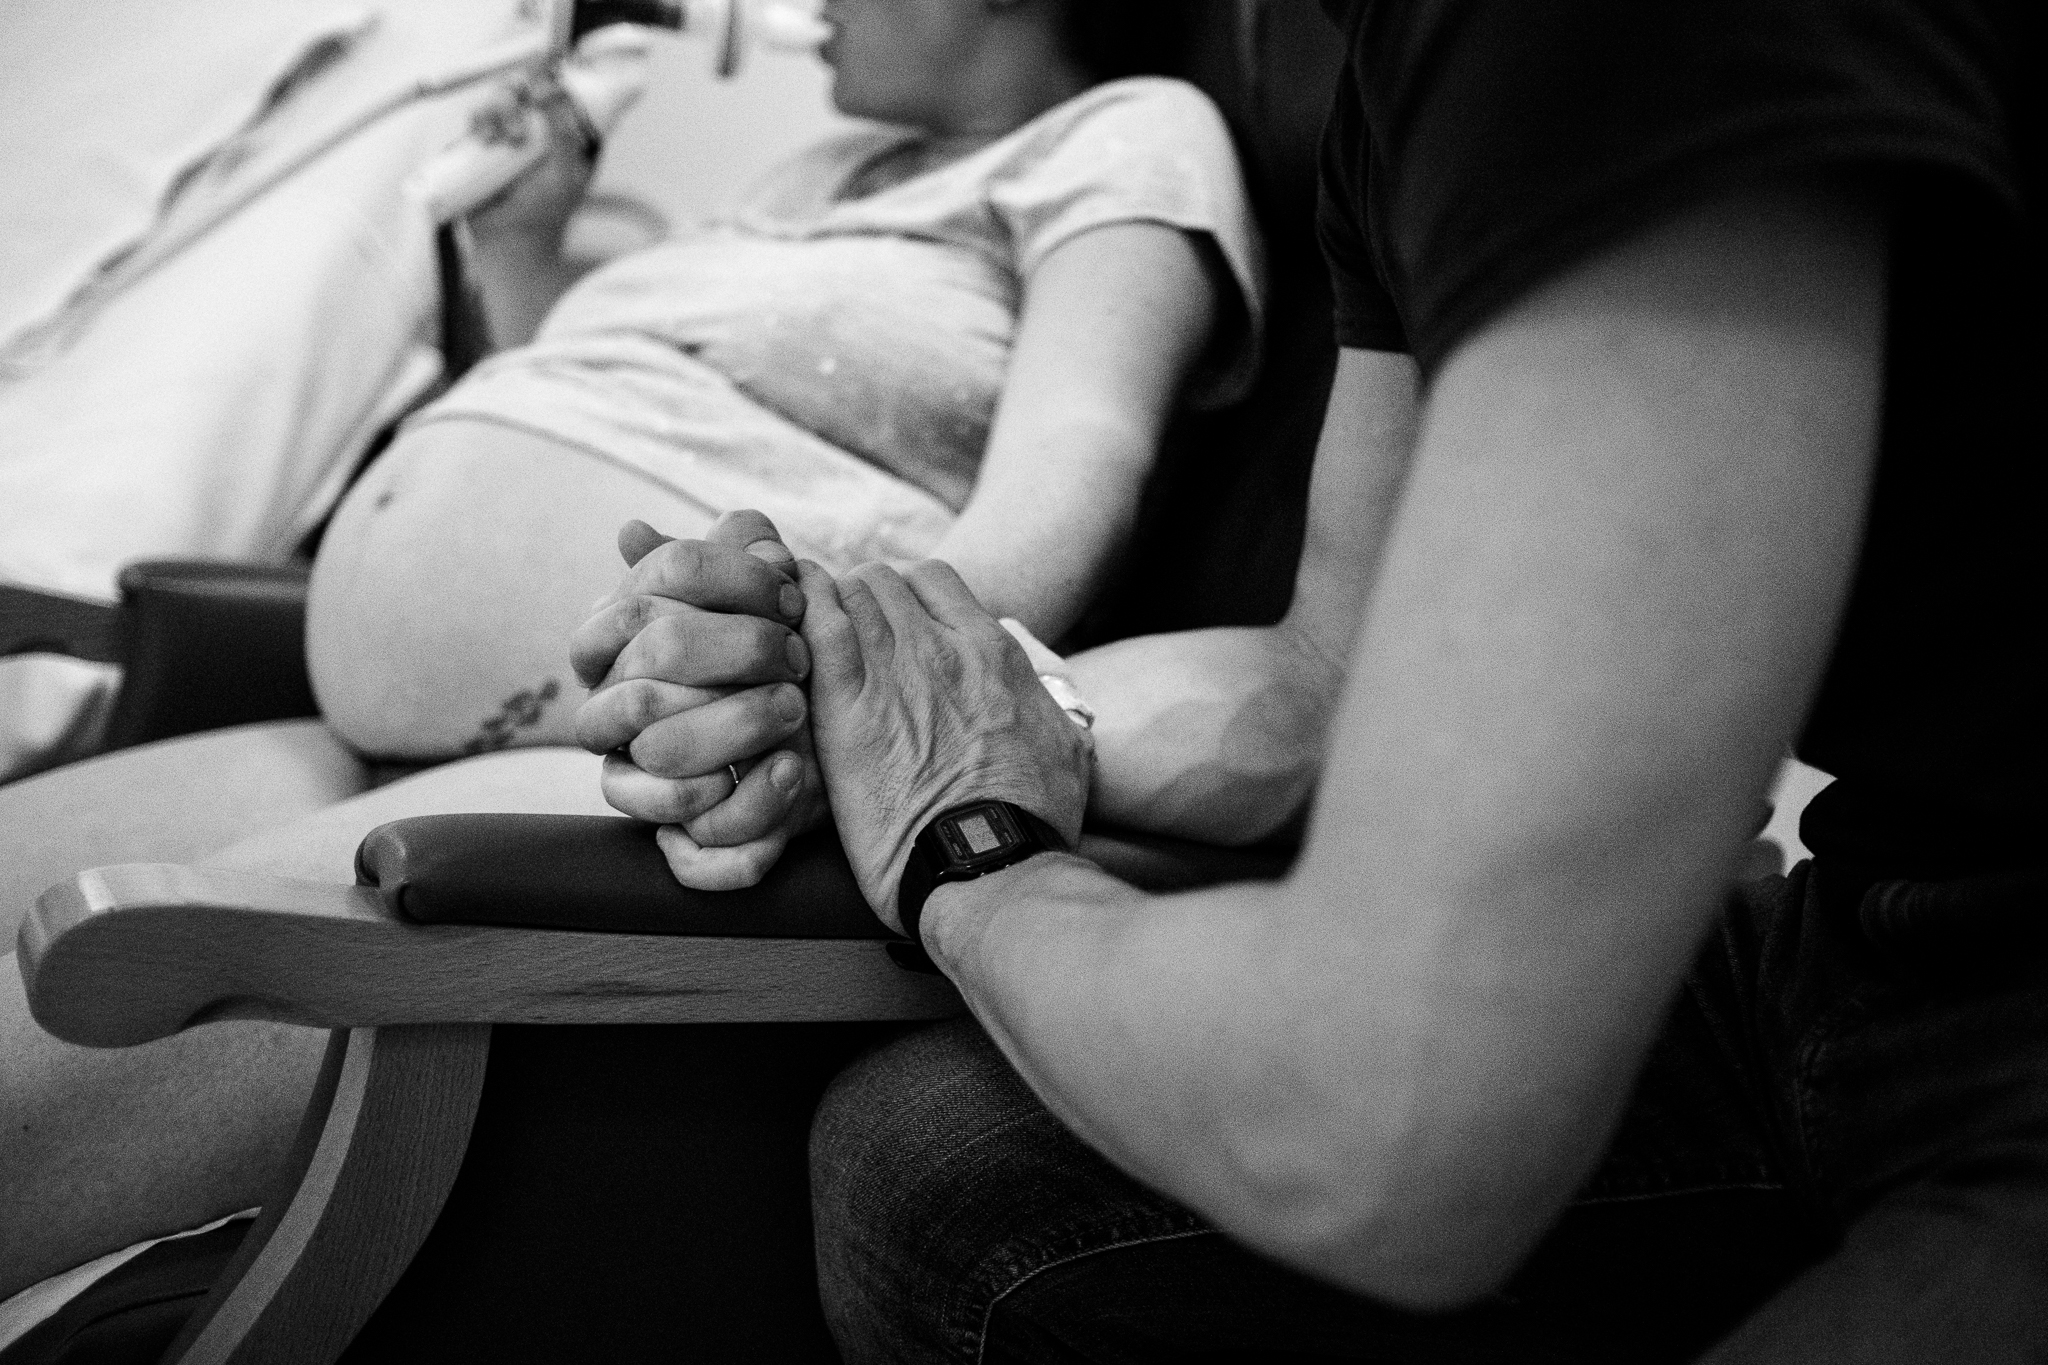 Birth Photographer Documentary Photography Newborn Baby Hospital Family - Jenny Harper-4.jpg